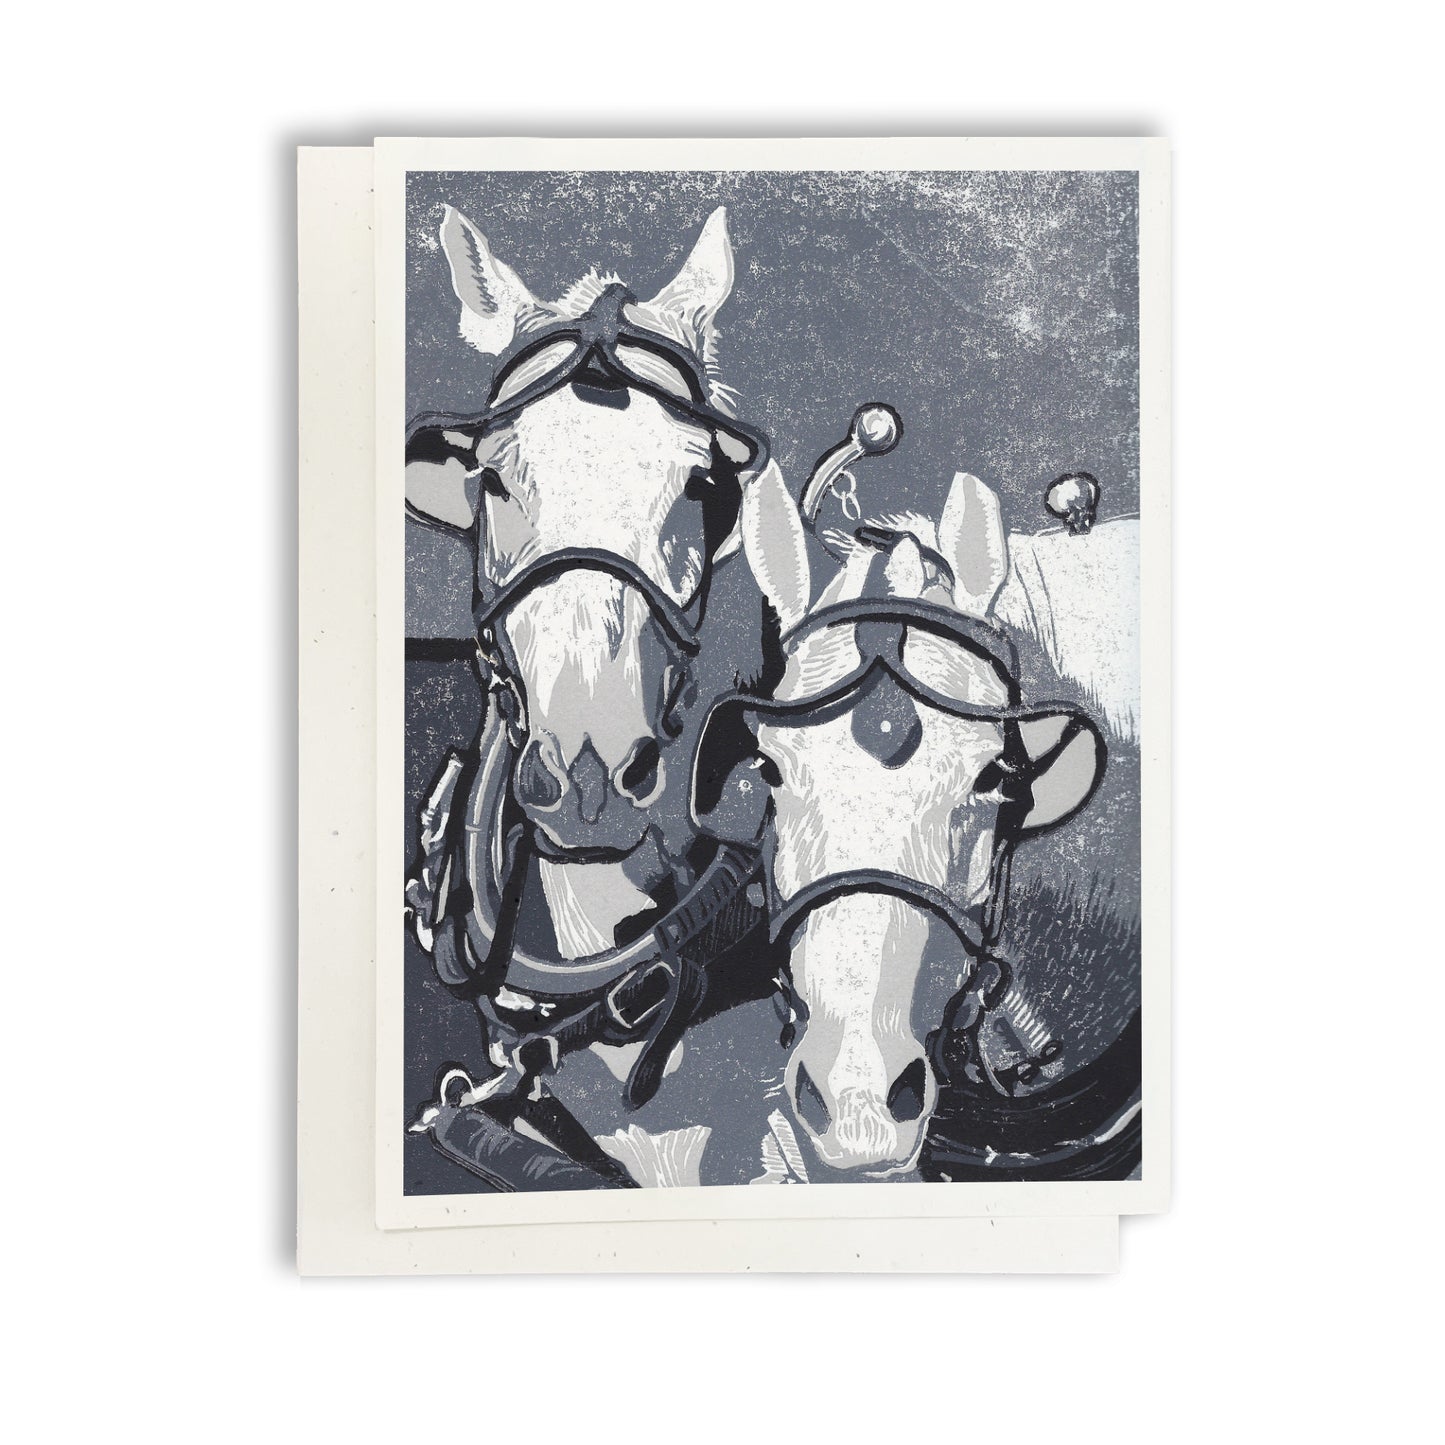 Two Horse Team greeting card by Natalia Wohletz, Peninsula Prints.